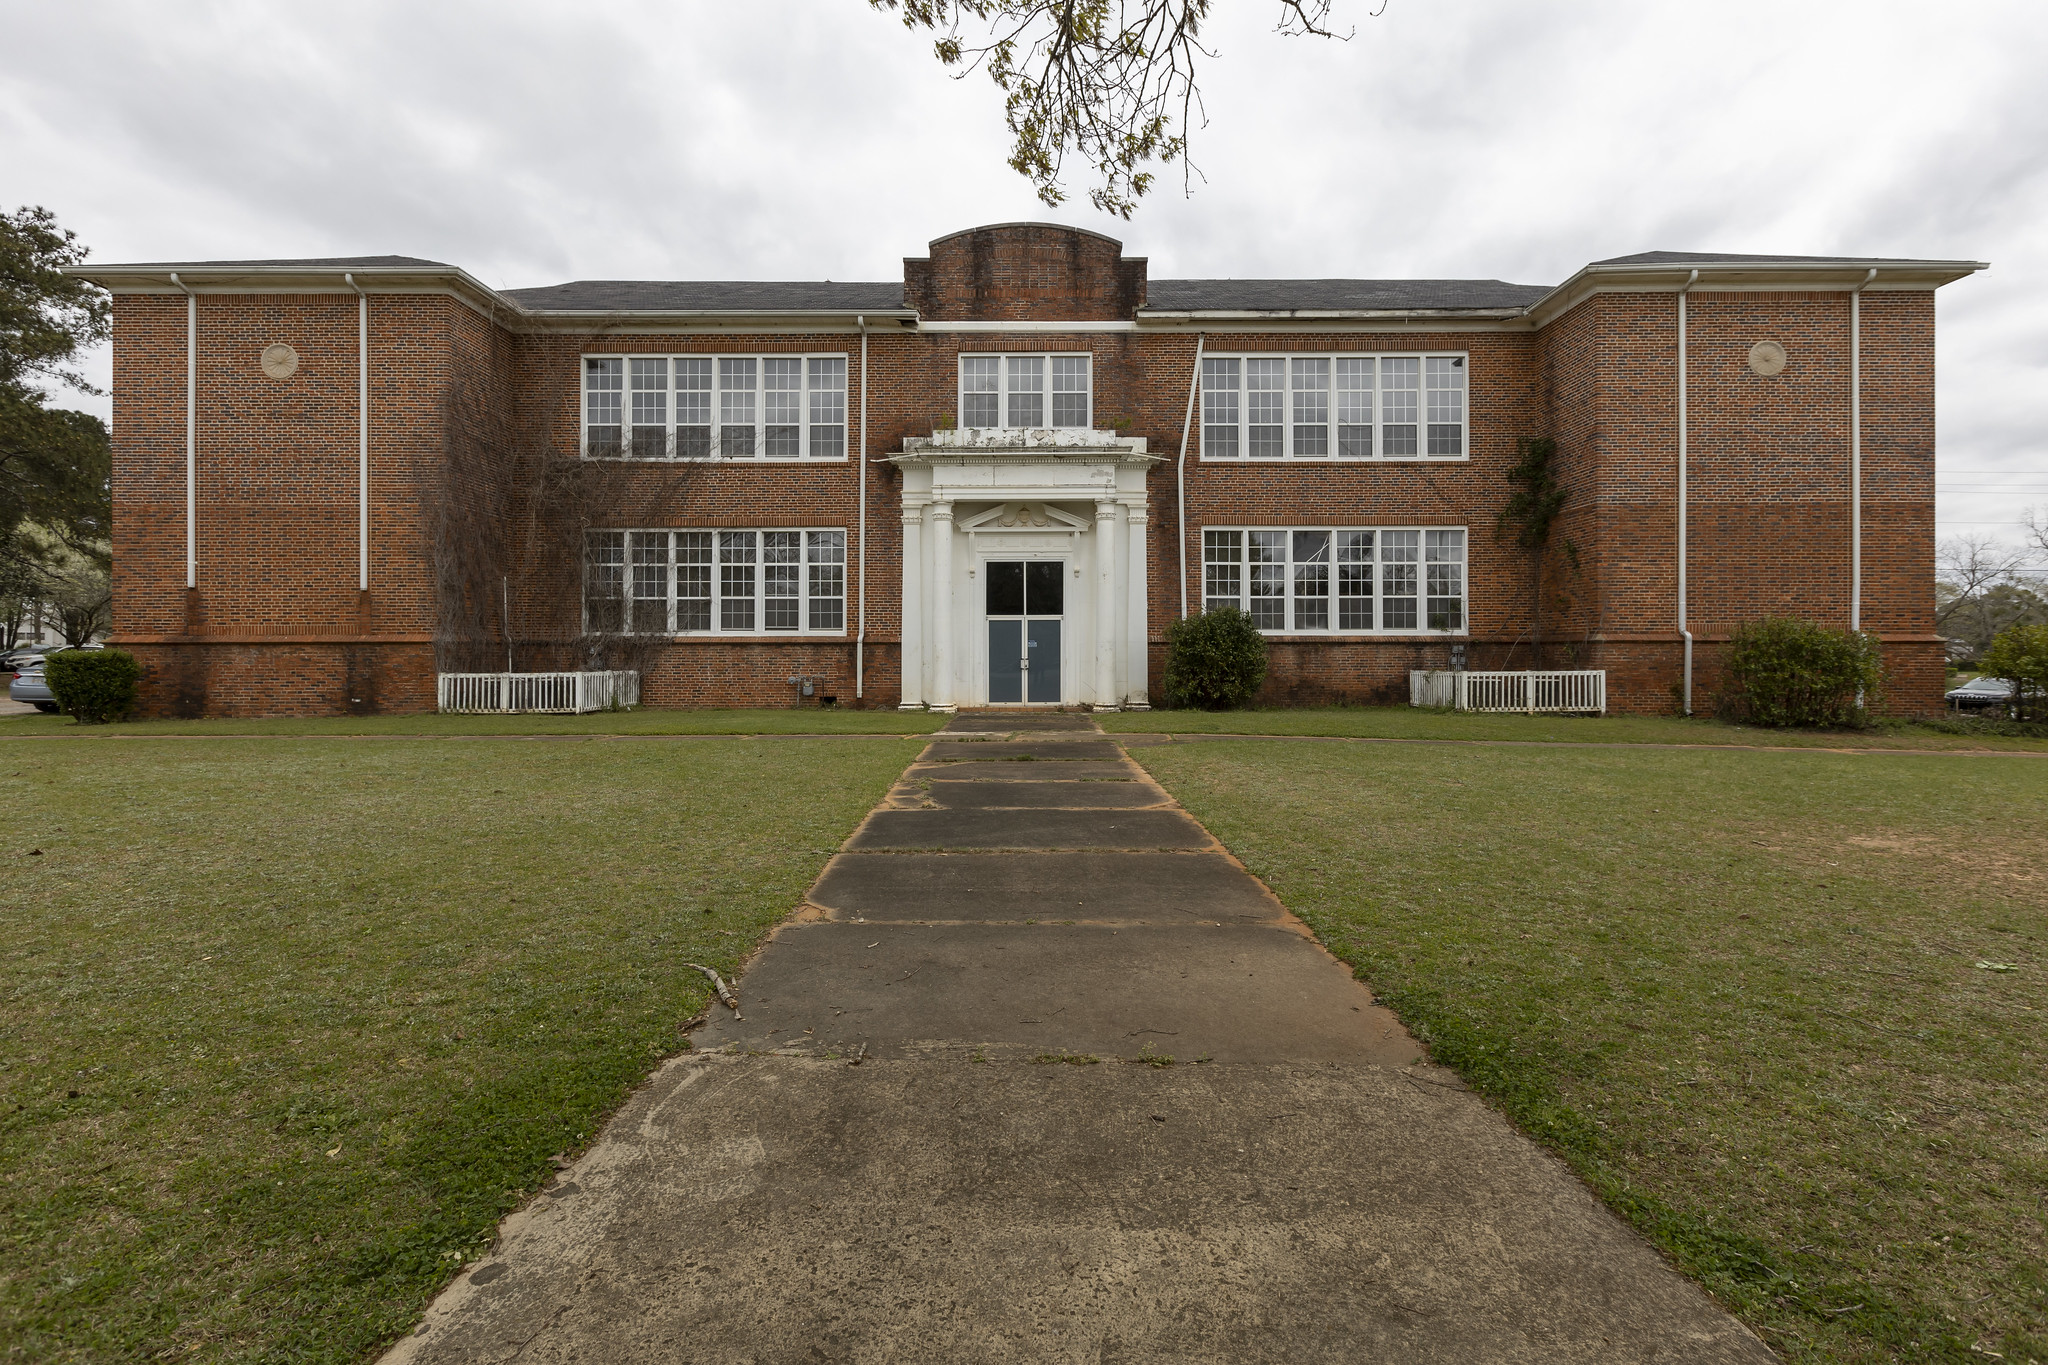 Randolph County Elementary School